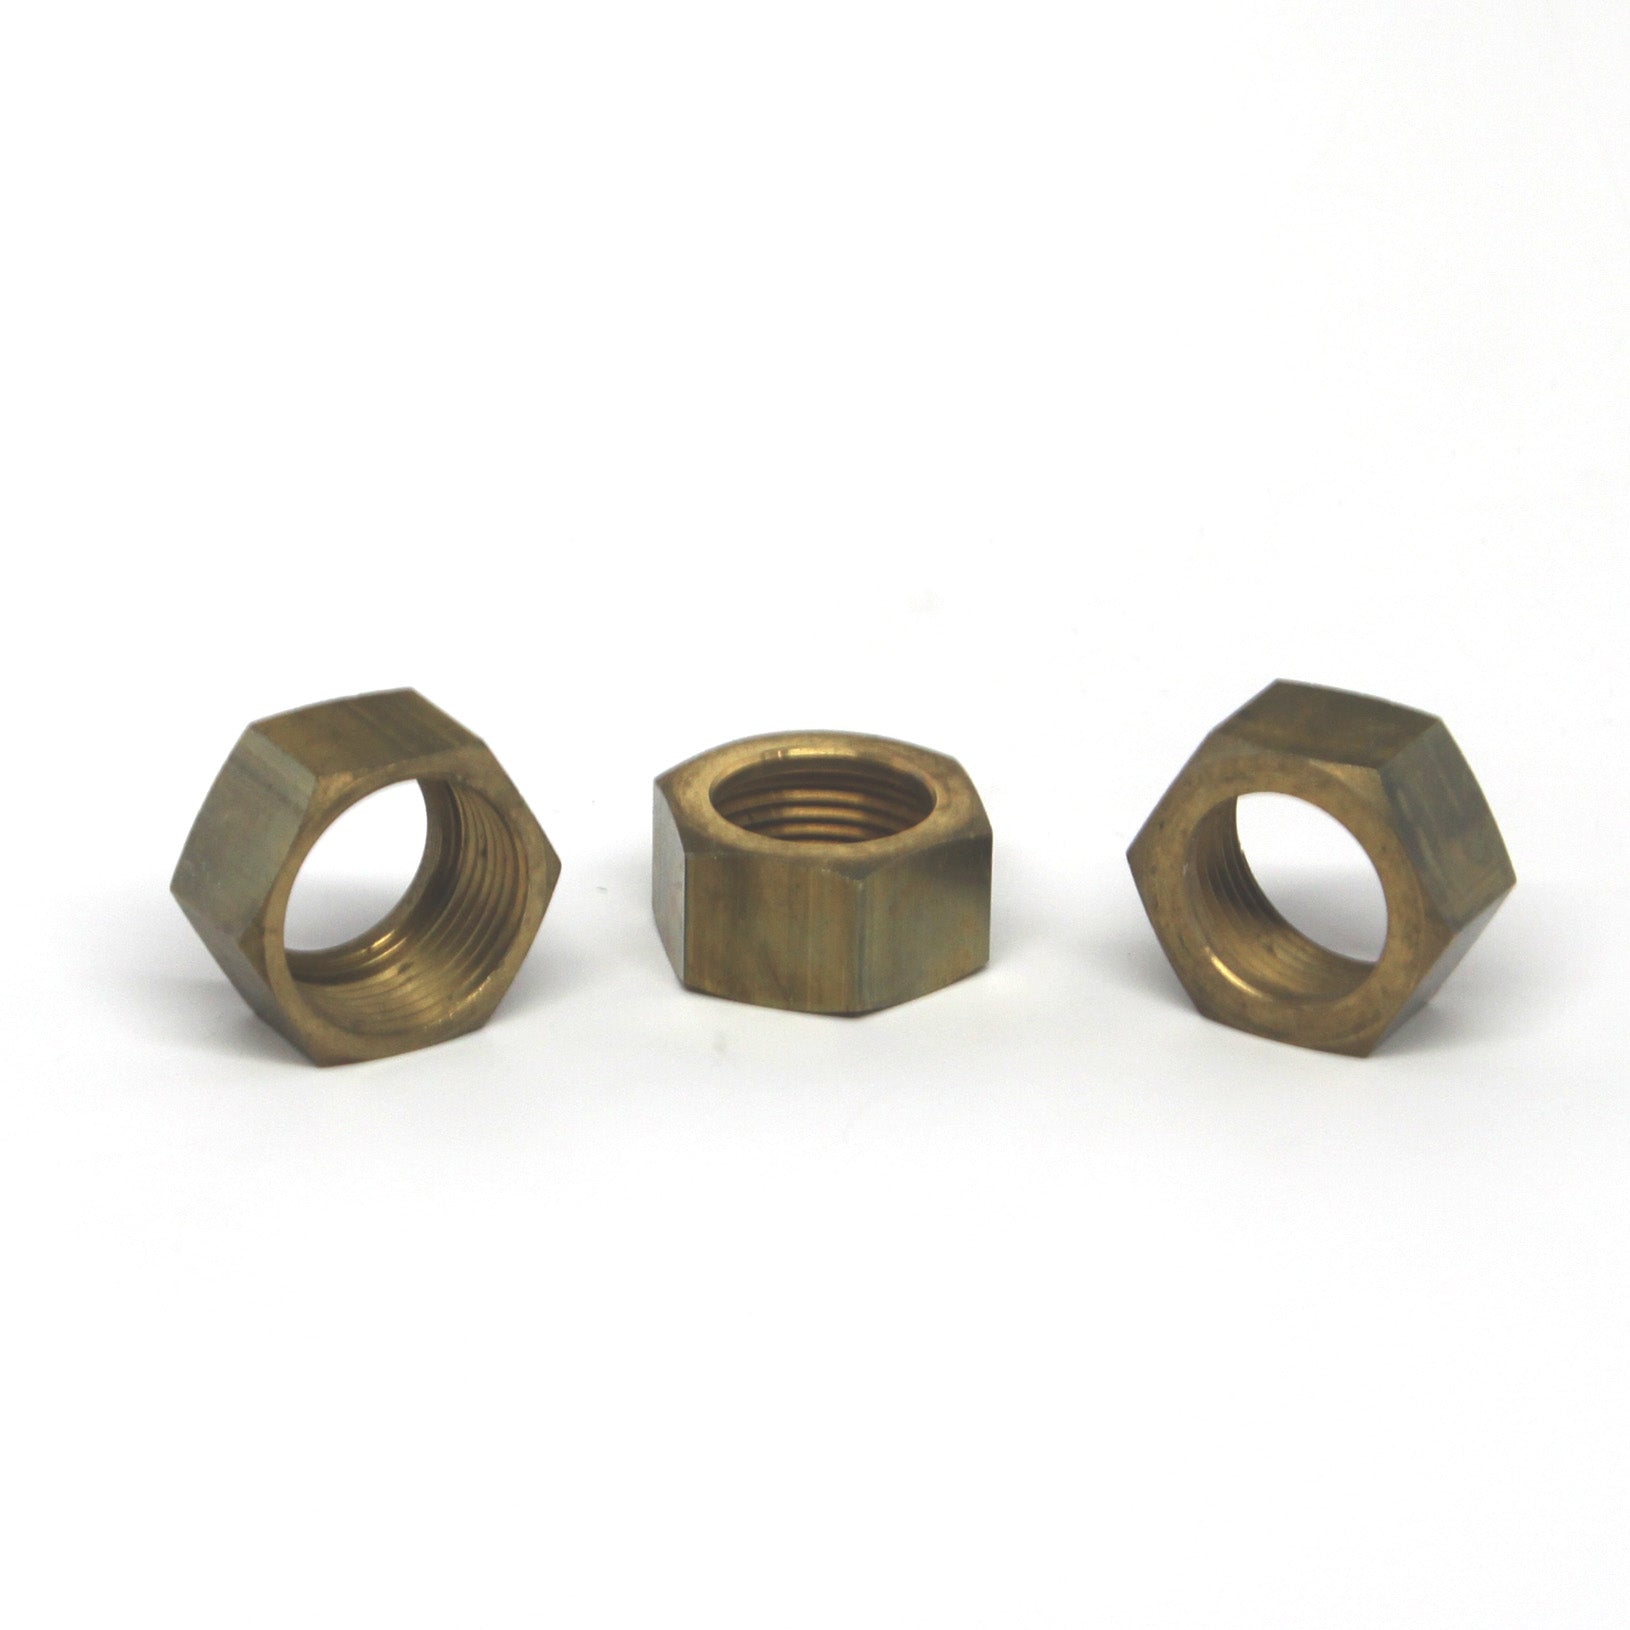 P498020 - Brass Coupling Nut for AquaDesign/Intersan Supply Set